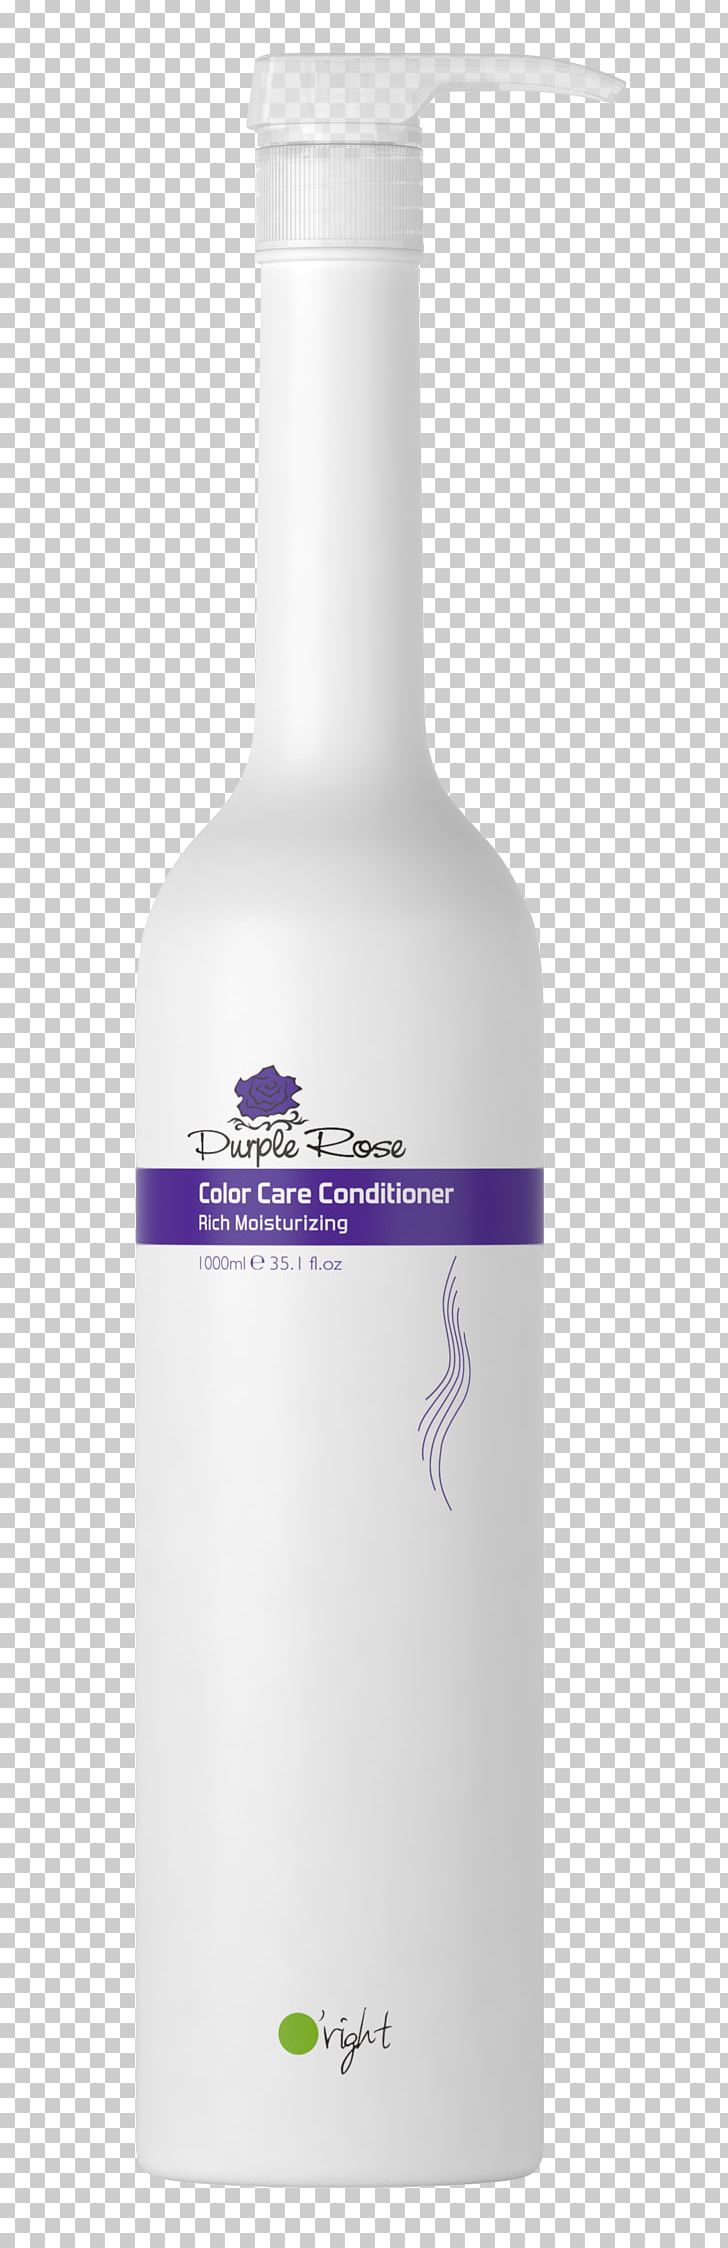 Lotion Bottle PNG, Clipart, Art, Bottle, Liquid, Lotion, Skin Care Free PNG Download